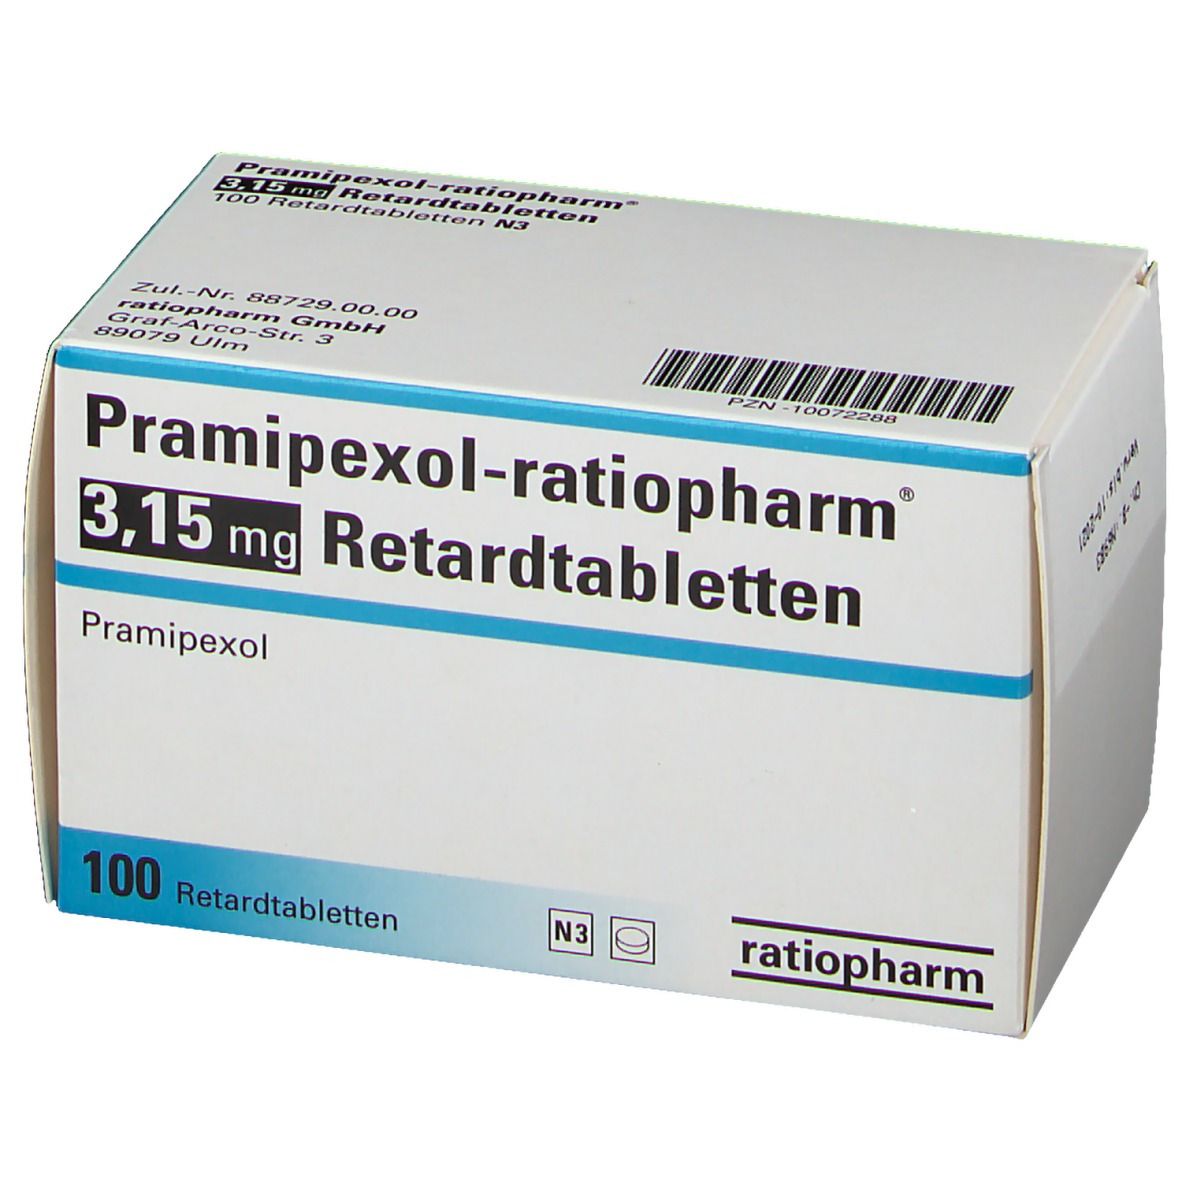 Pramipexol-ratiopharm® 3,15 mg